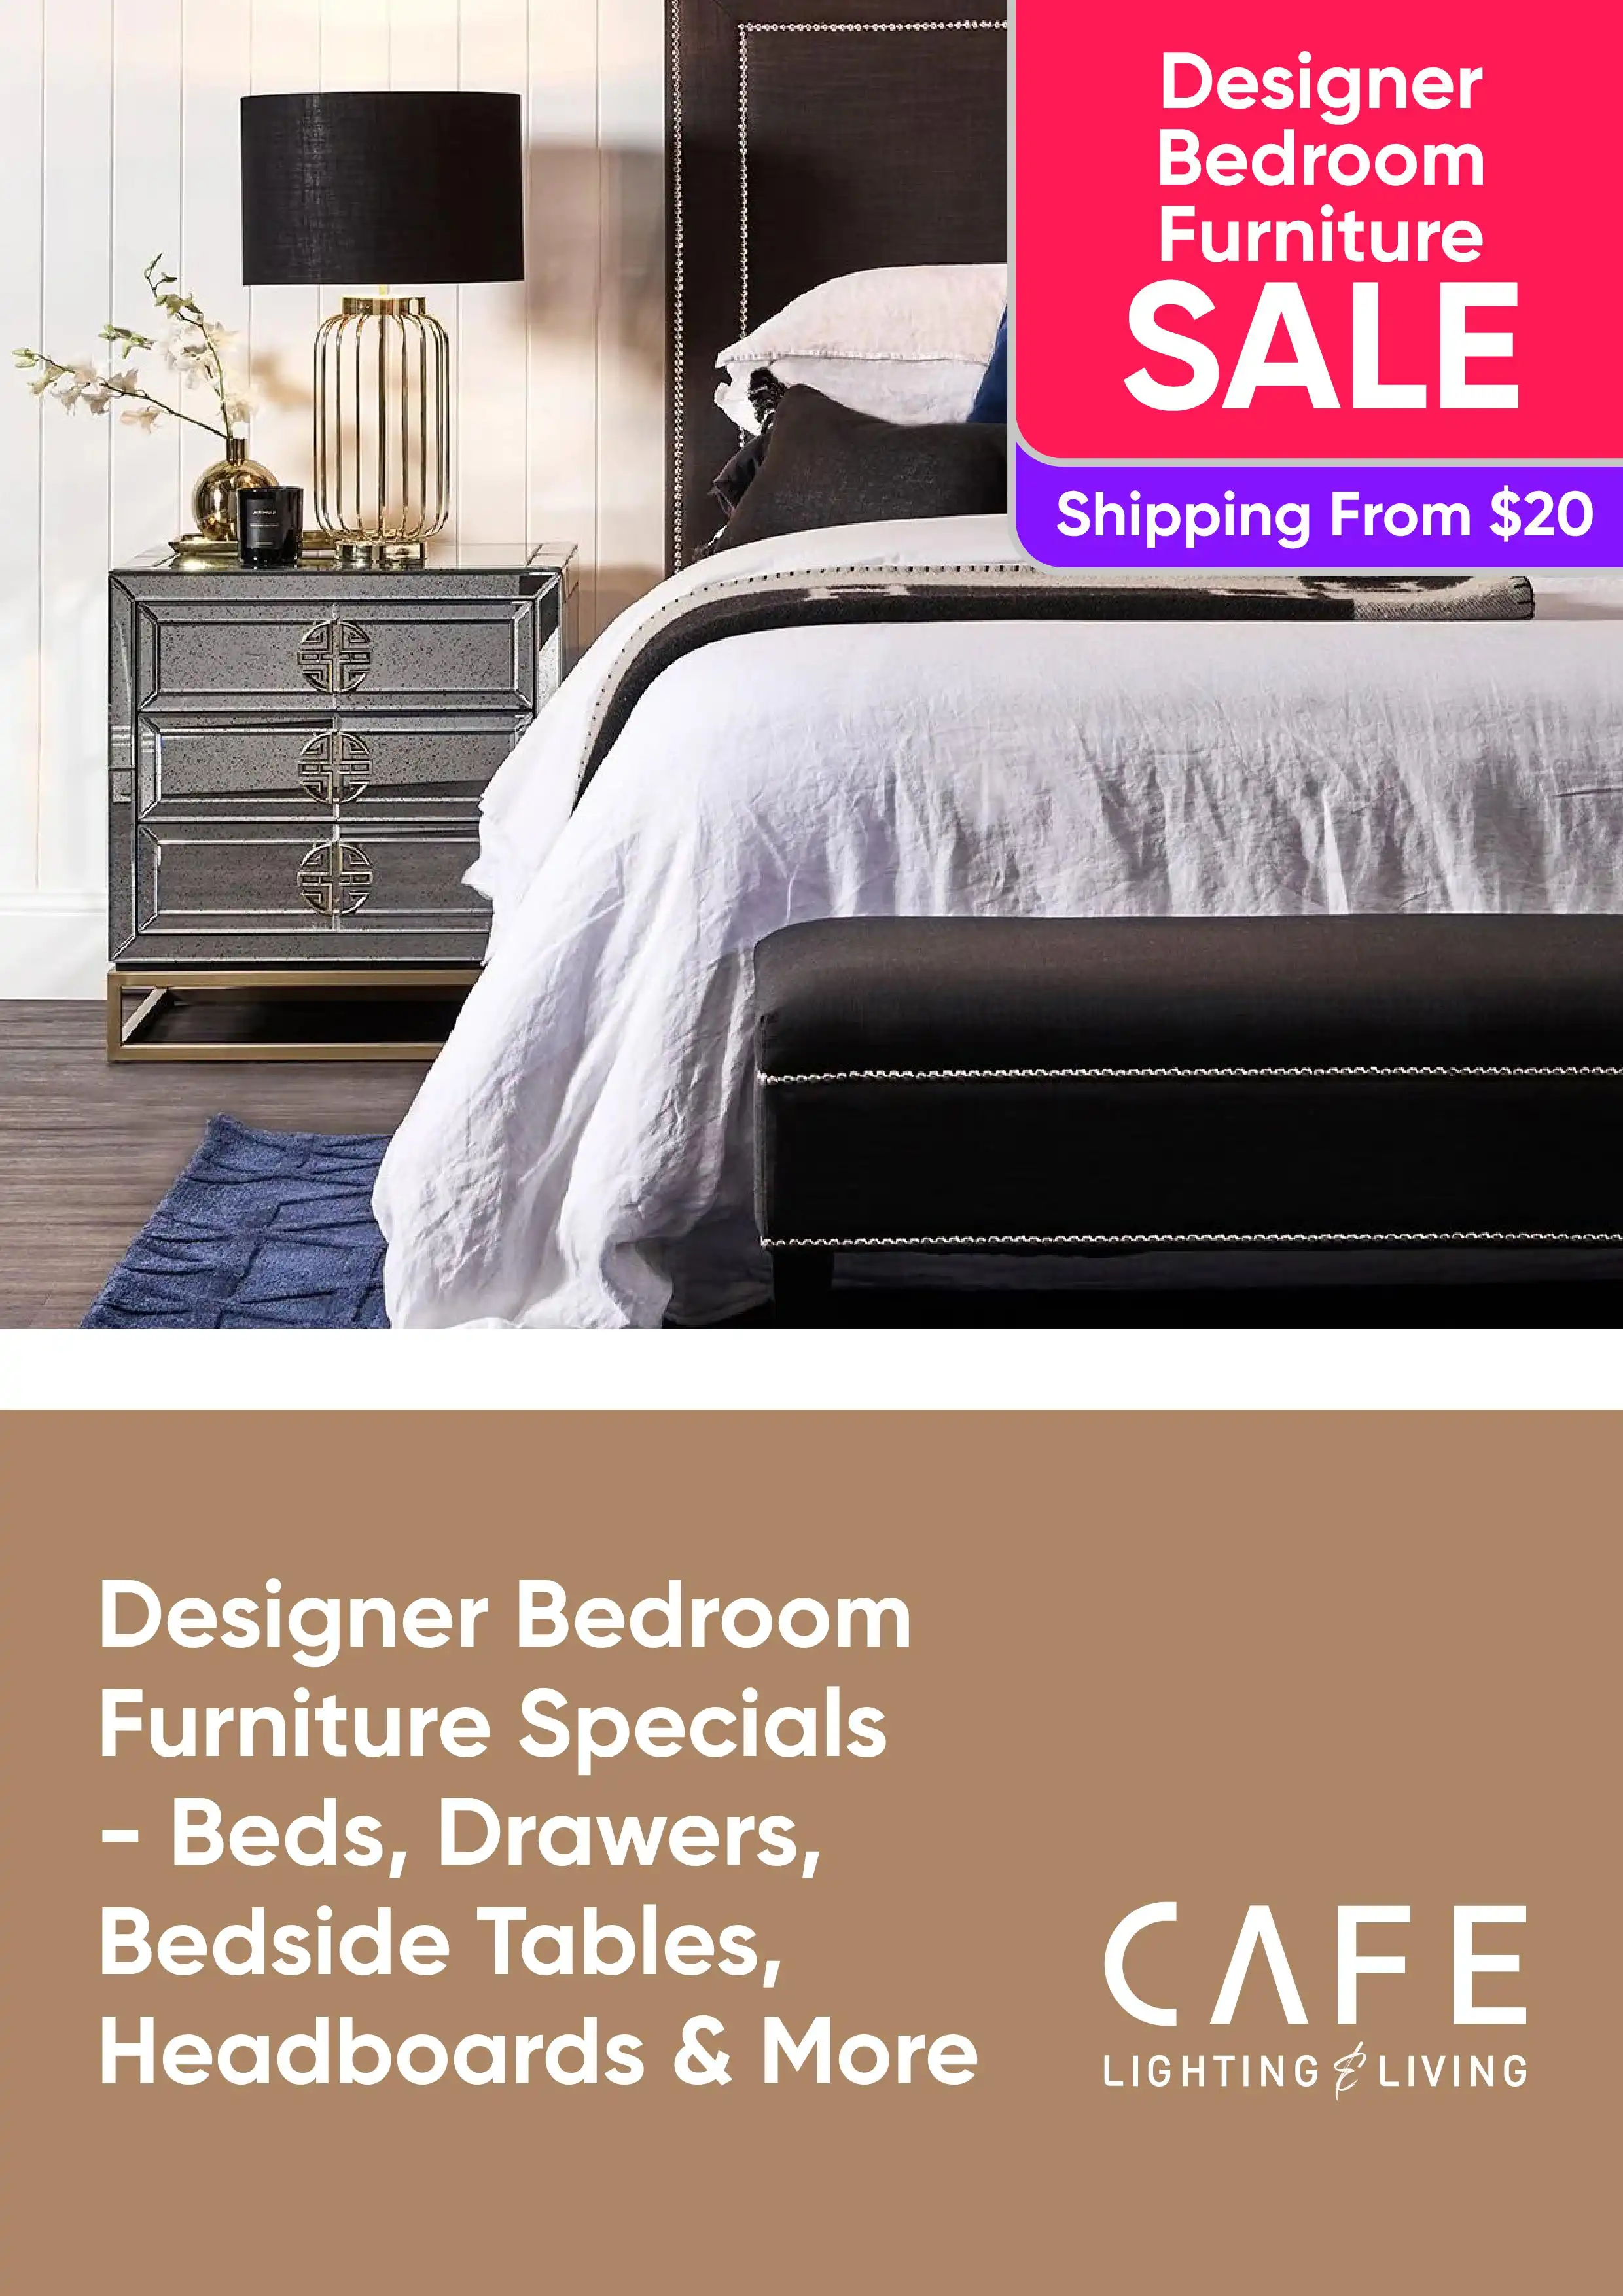 Designer Bedroom Furniture Specials - Beds, Drawers, Bedside Tables, Headboards and More